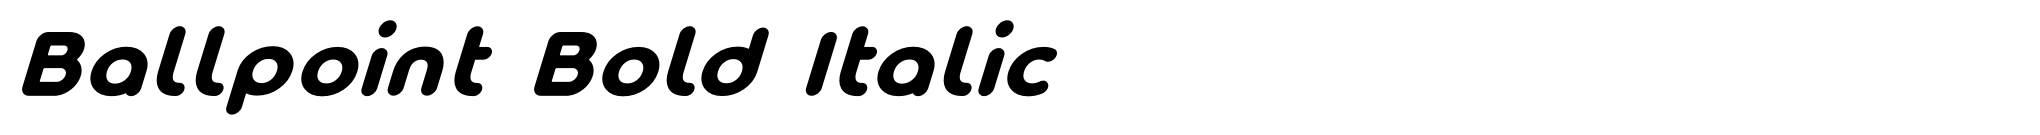 Ballpoint Bold Italic image